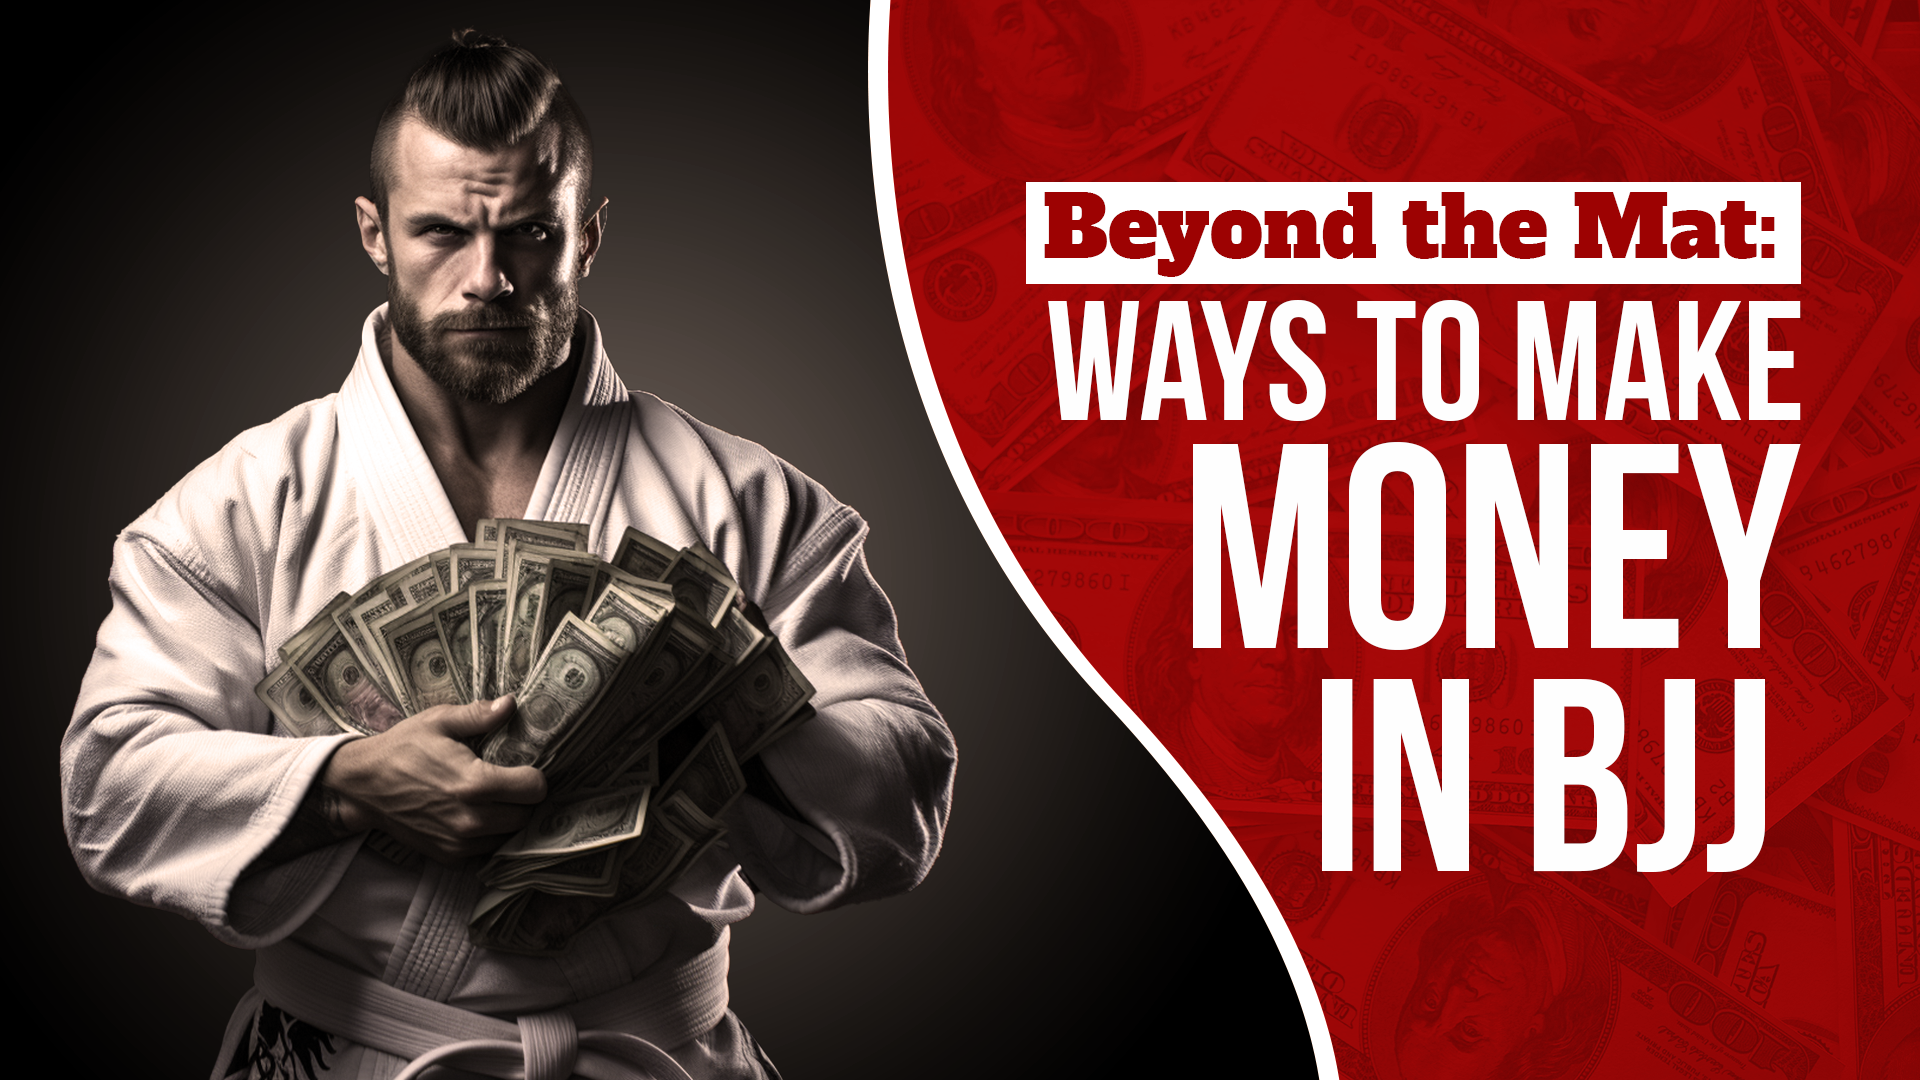 Beyond the Mat: Ways to Make Money in BJJ